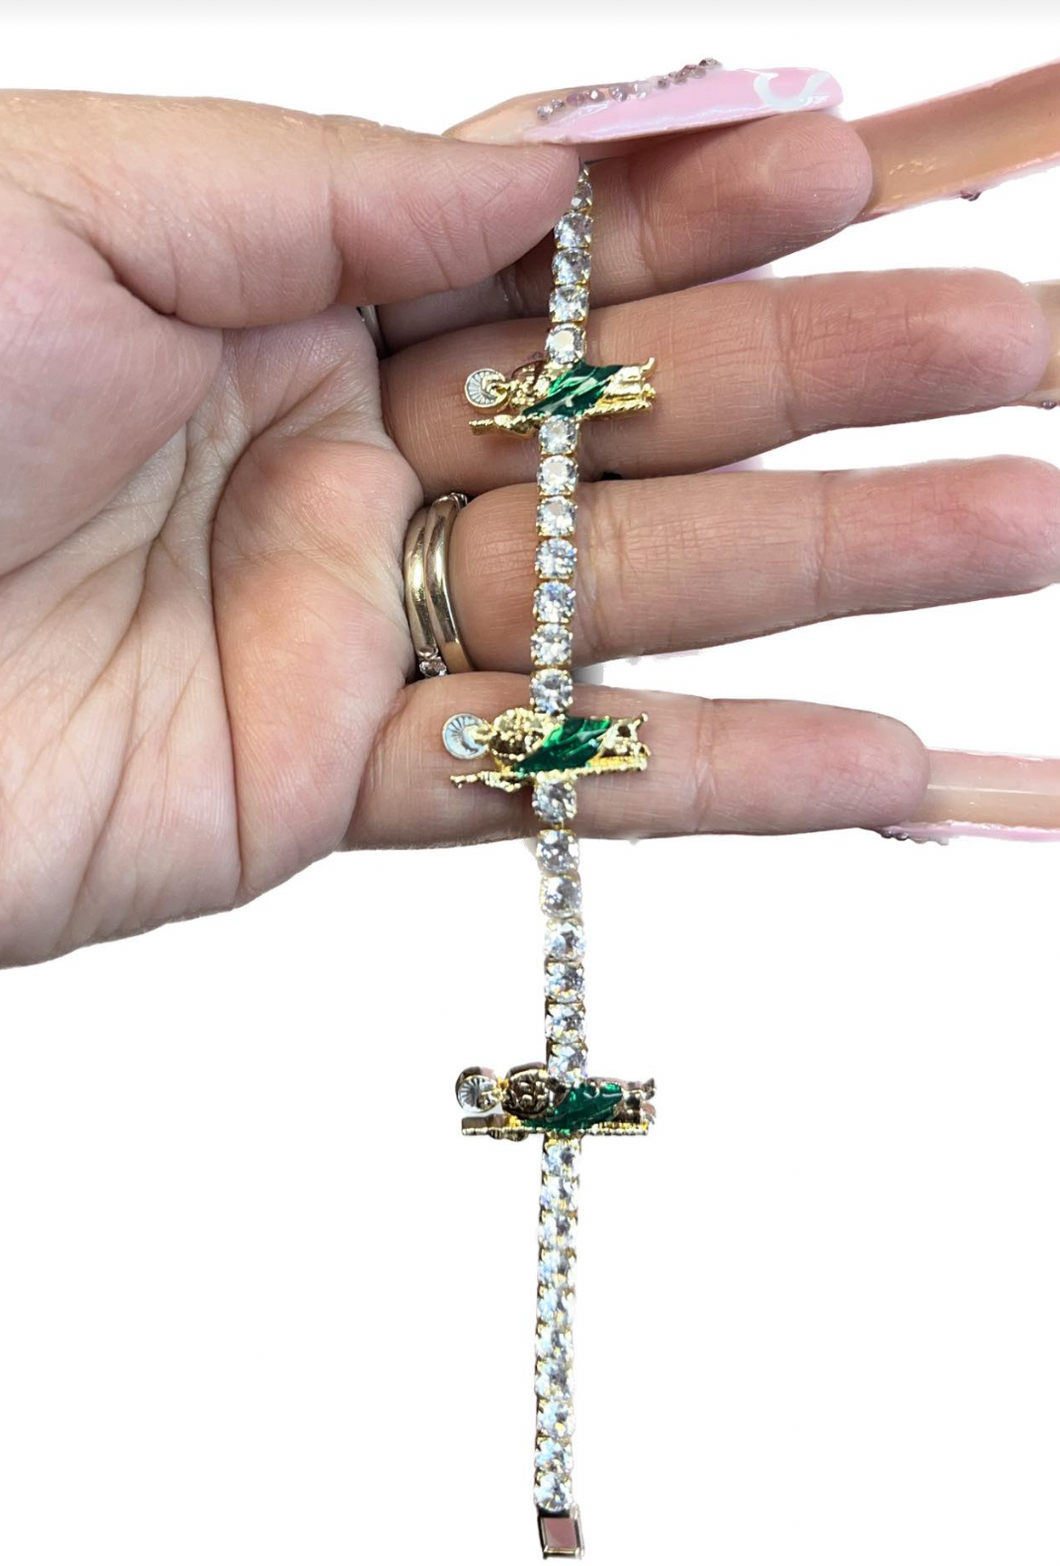 San judas jeweled bracelet